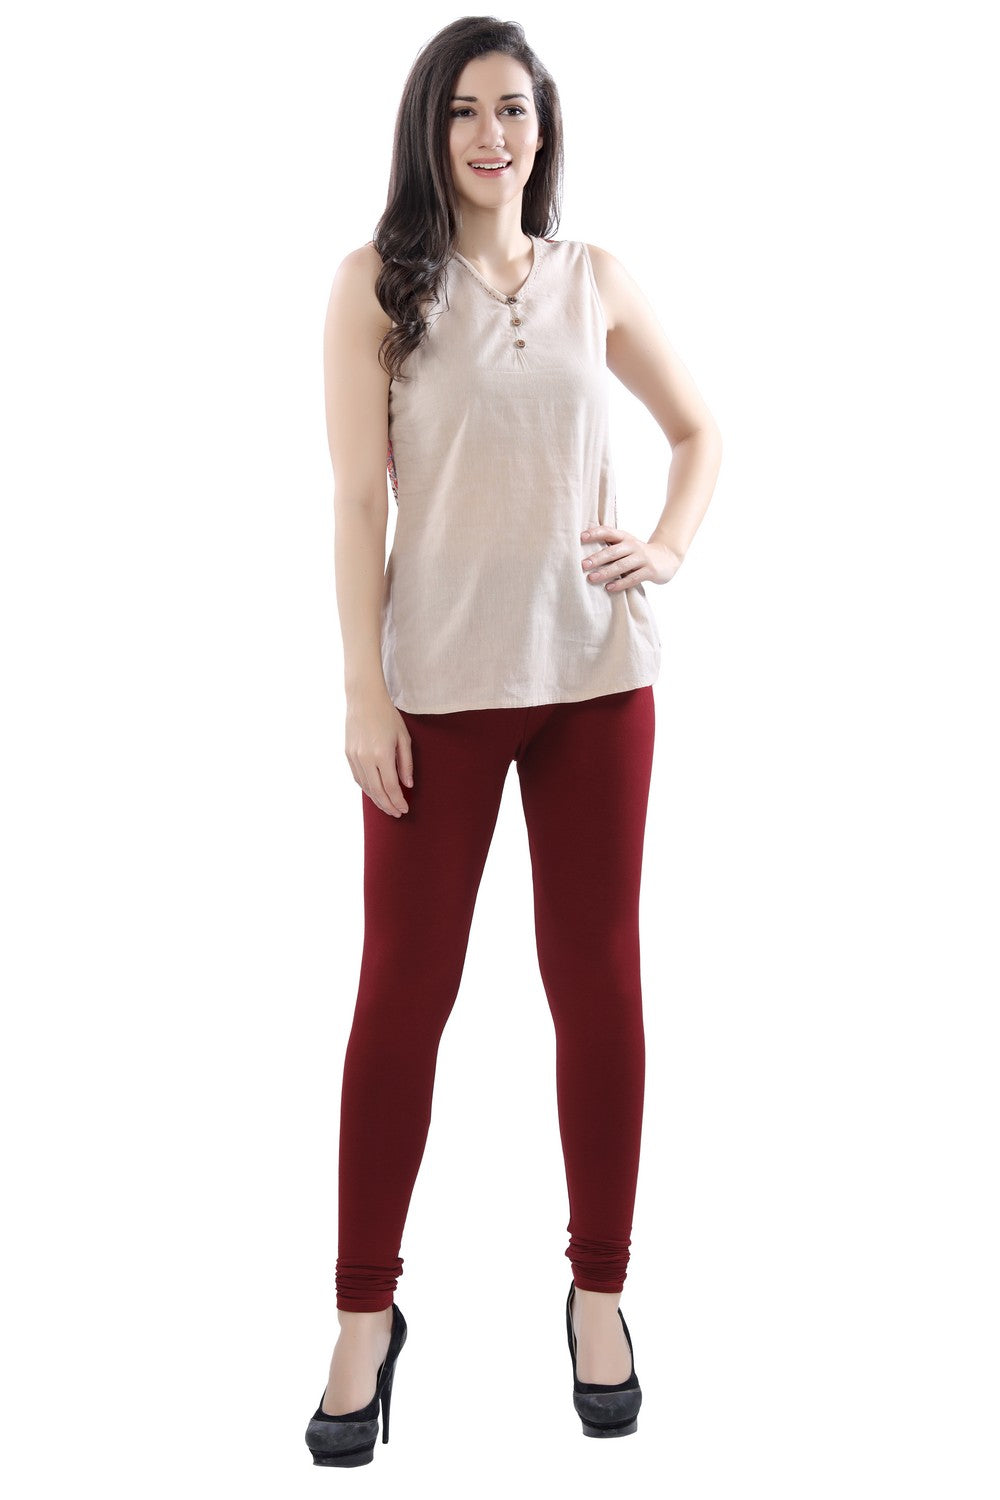 TRASA Women's Cotton 4 Way Stretchable Slim Fit Churidar Leggings - Red